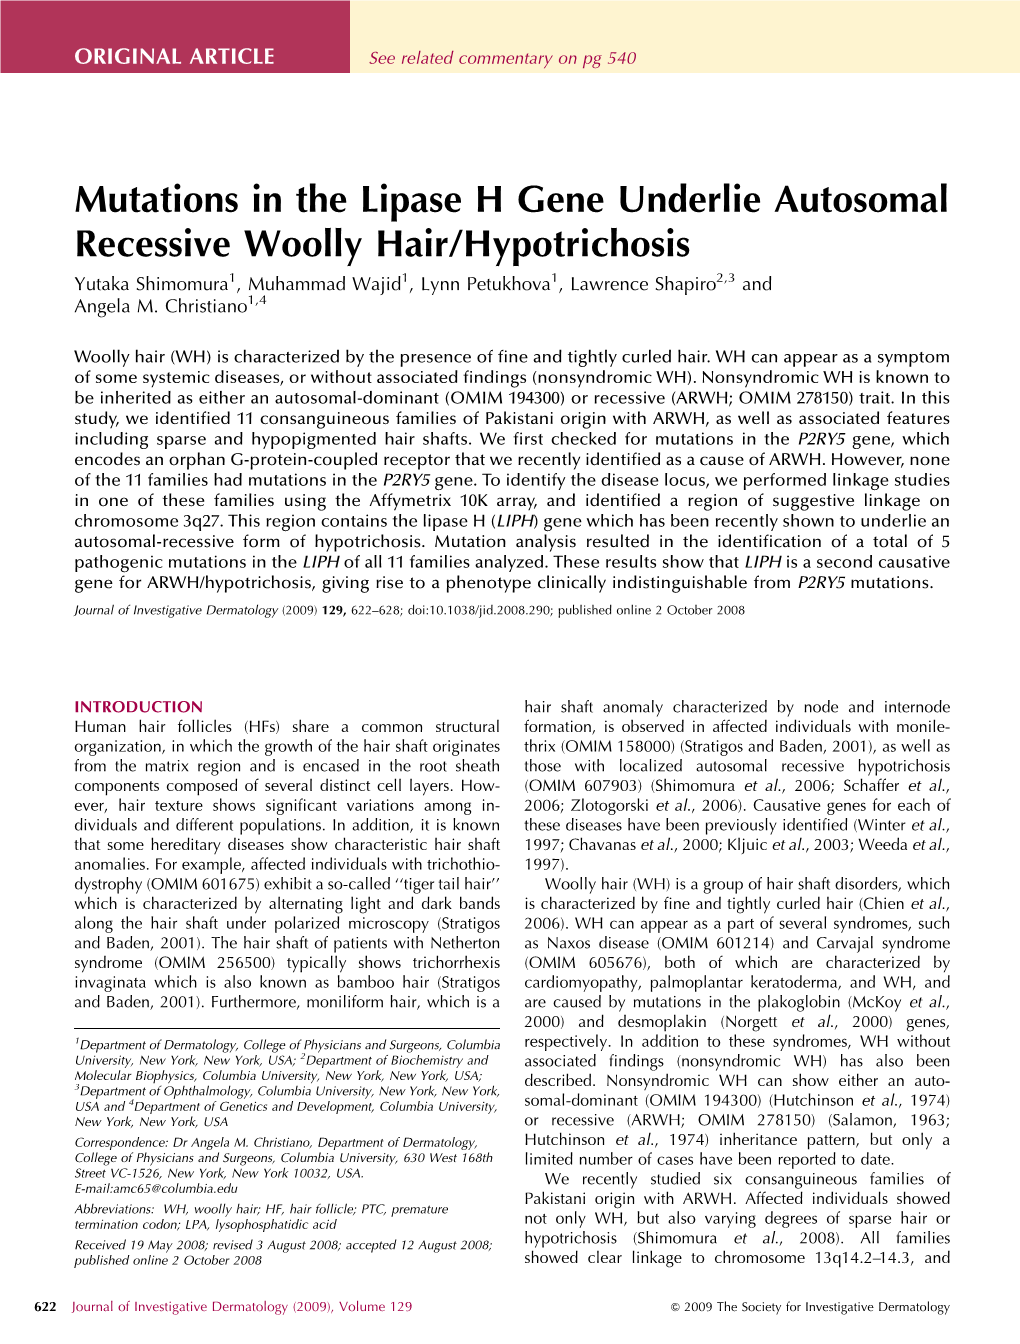 Mutations in the Lipase H Gene Underlie Autosomal Recessive